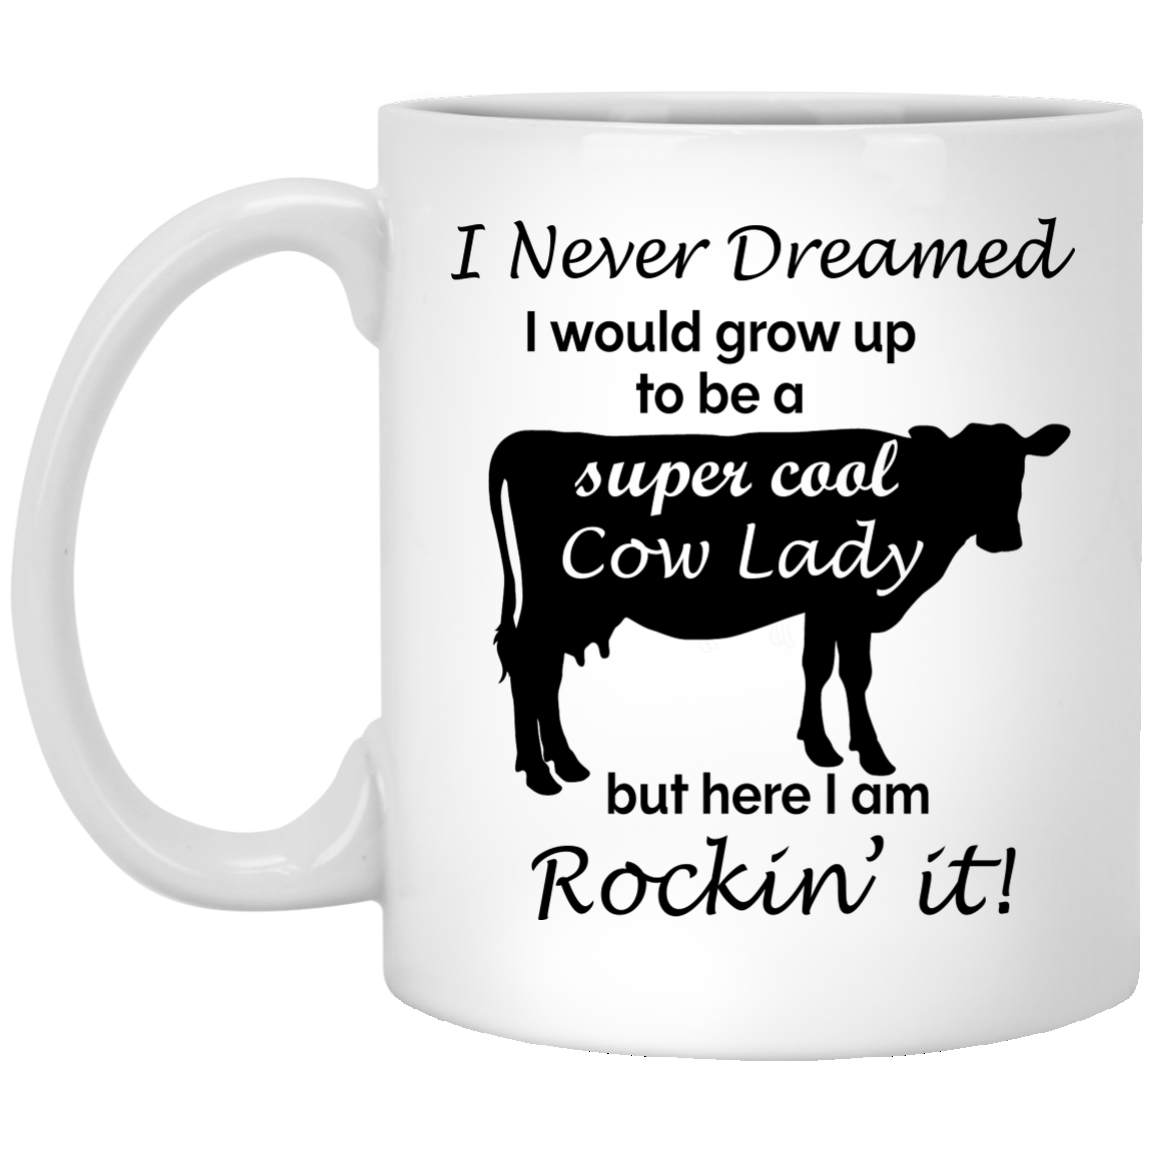 I never dreamed I would grow up to be a super cool Cow lady, but here I am, rockin' it mug